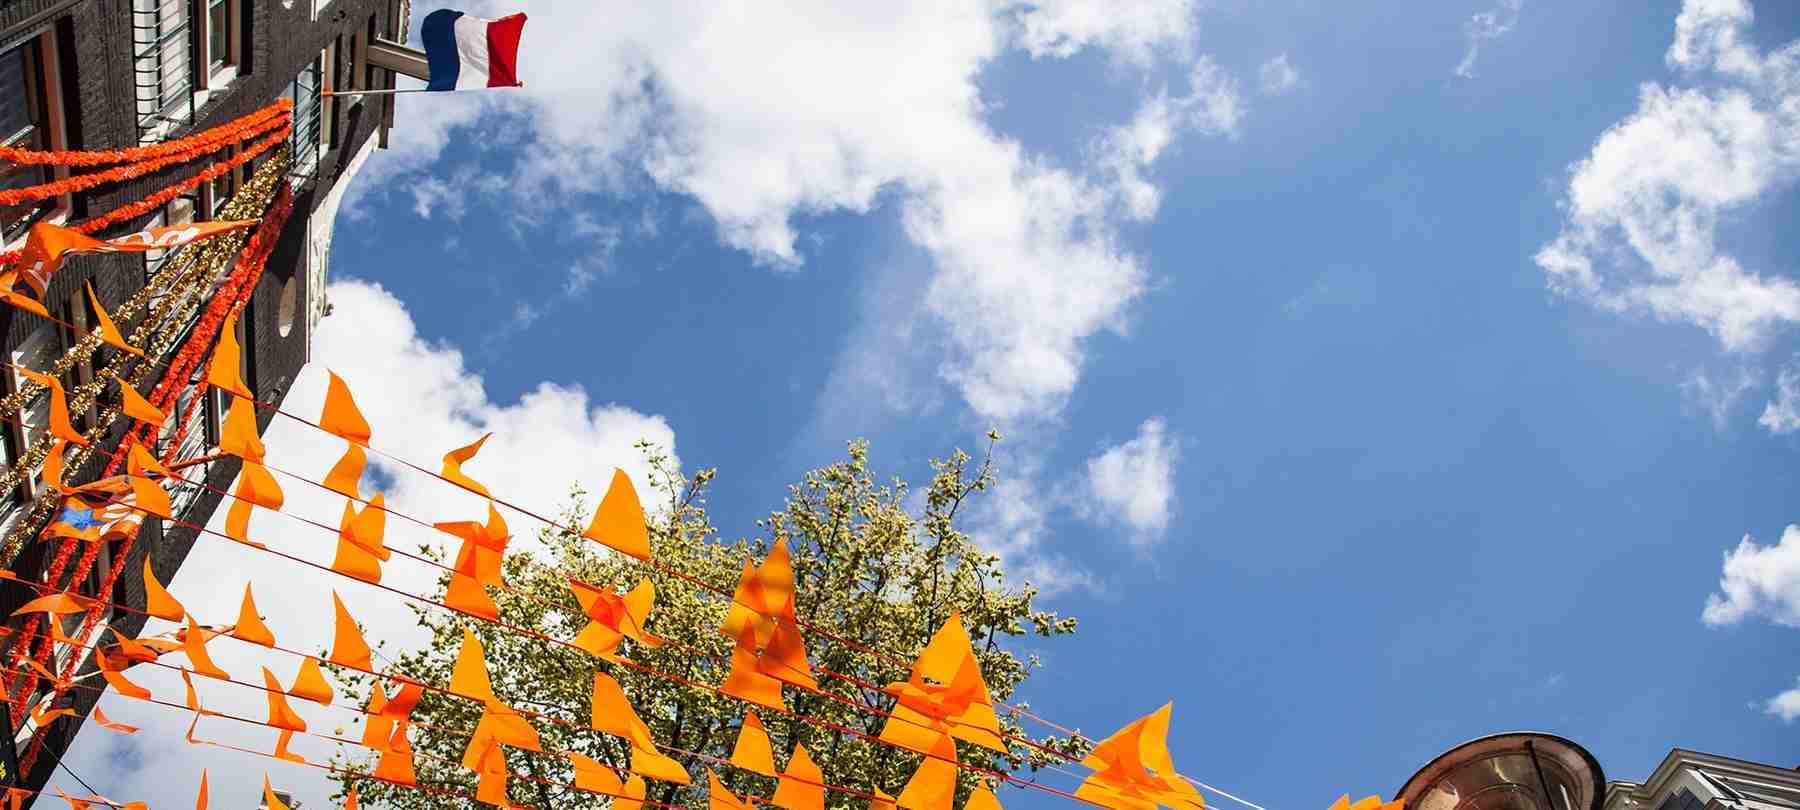 Straat met oranje vlaggetjes tijdens Koningsdag